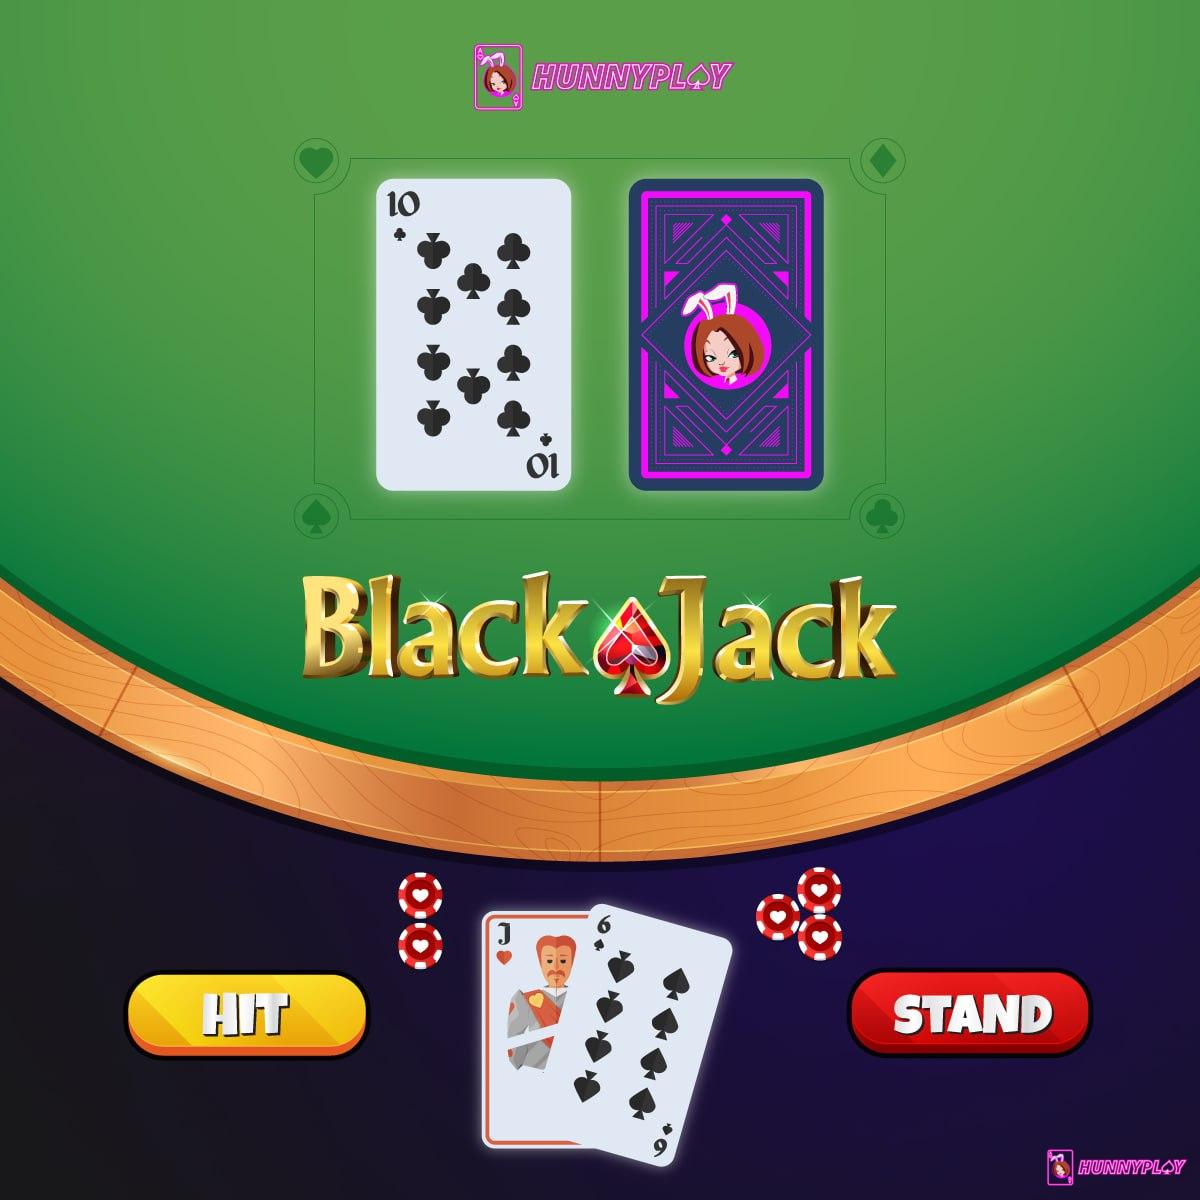 Play Blackjack at HunnyPlay